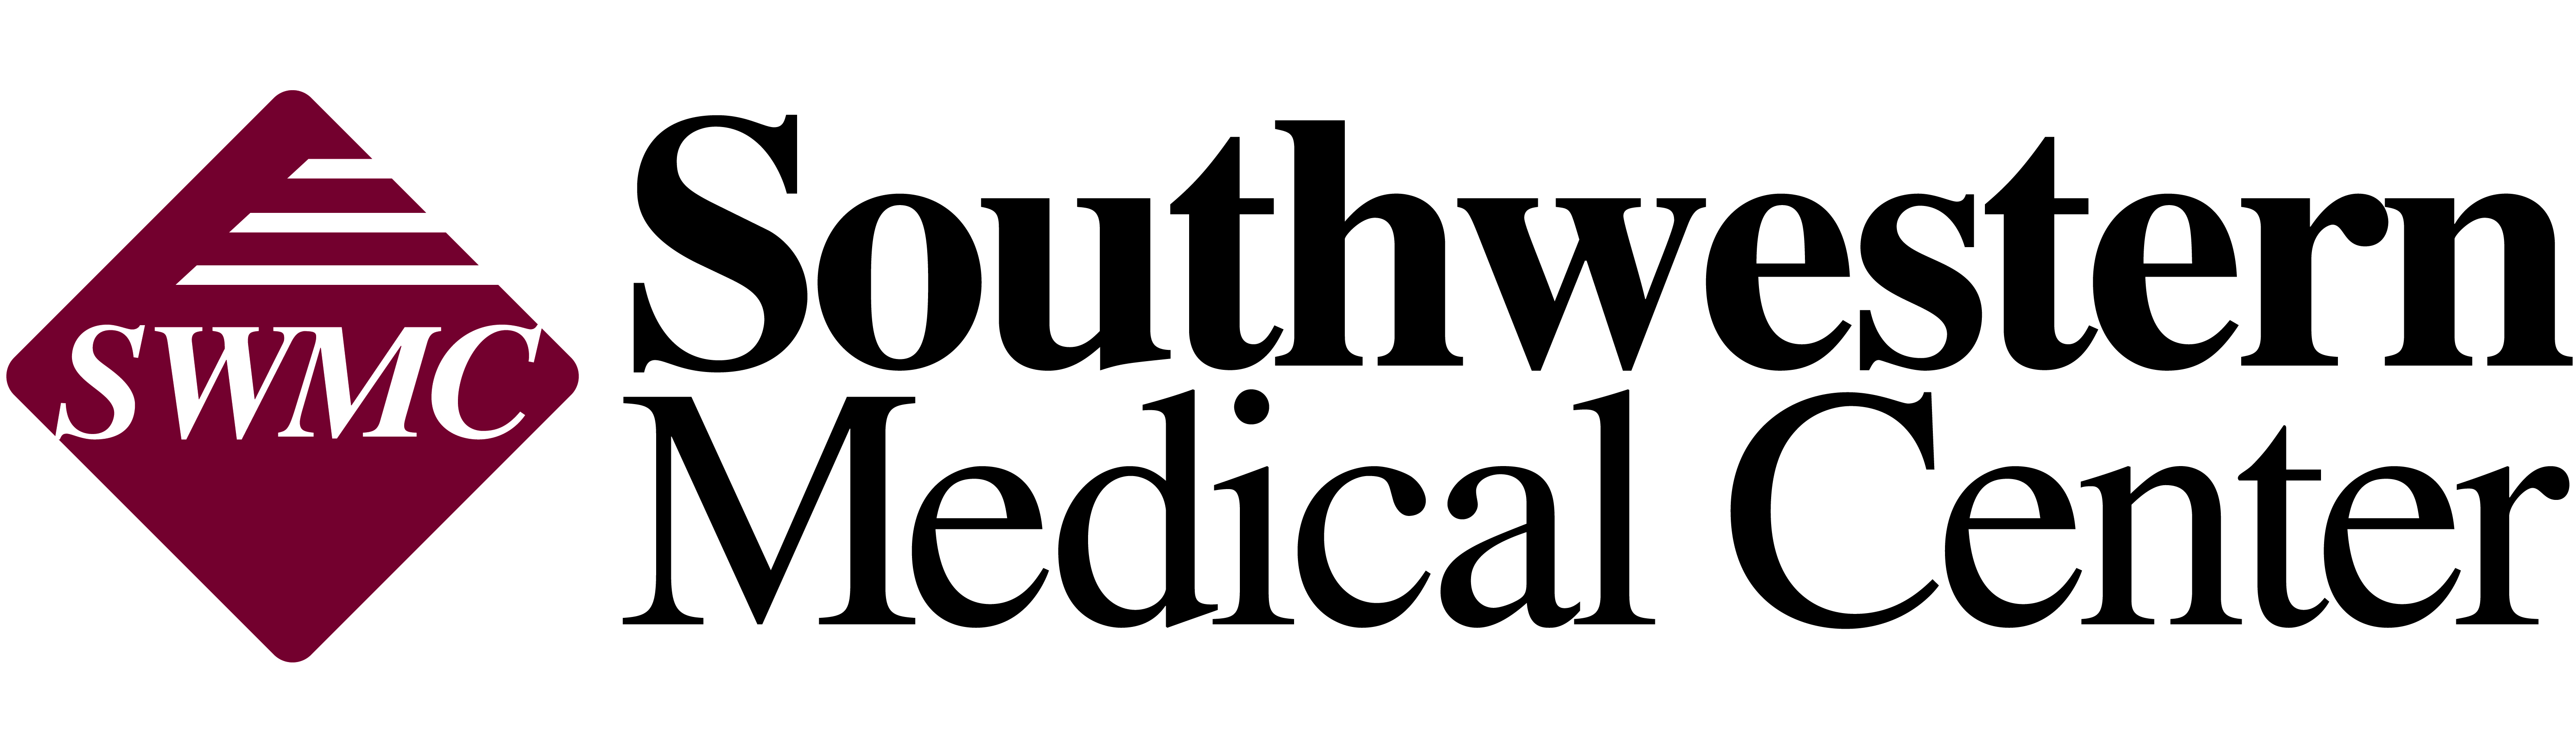 H.   Southwestern Medical Center (Tier 4)